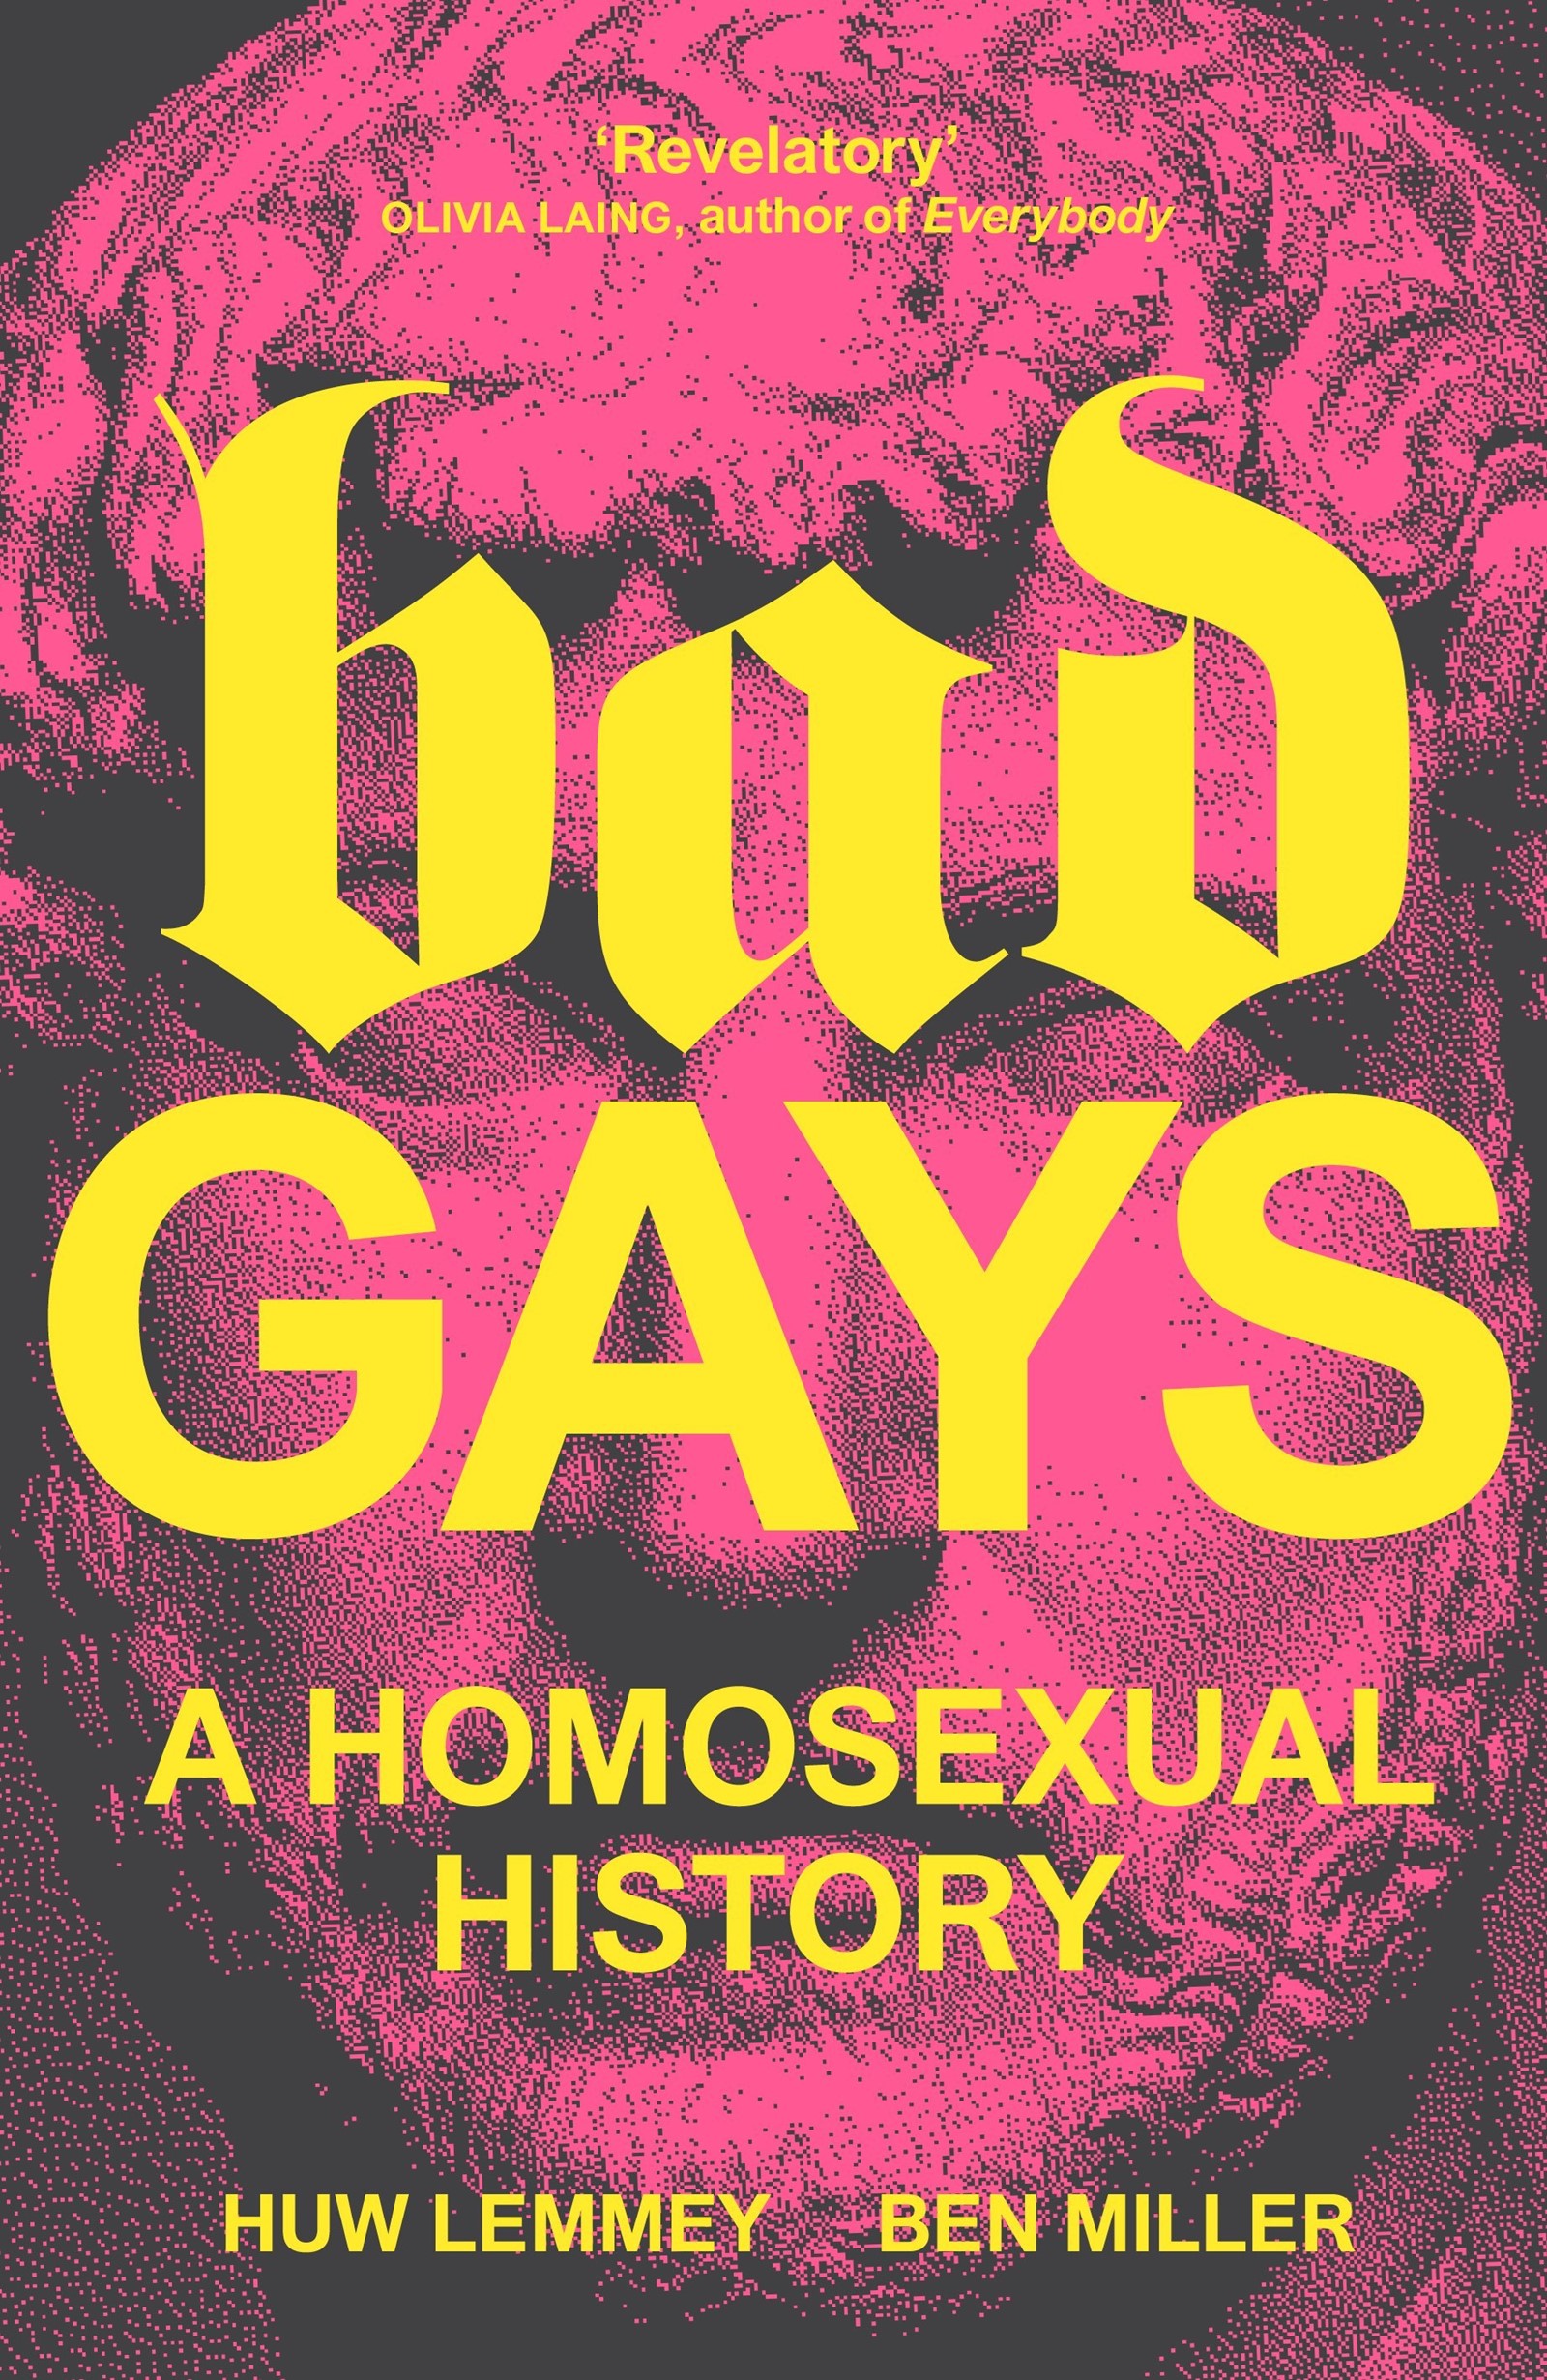 Bad Gays by Ben Miller and Huw Lemmey